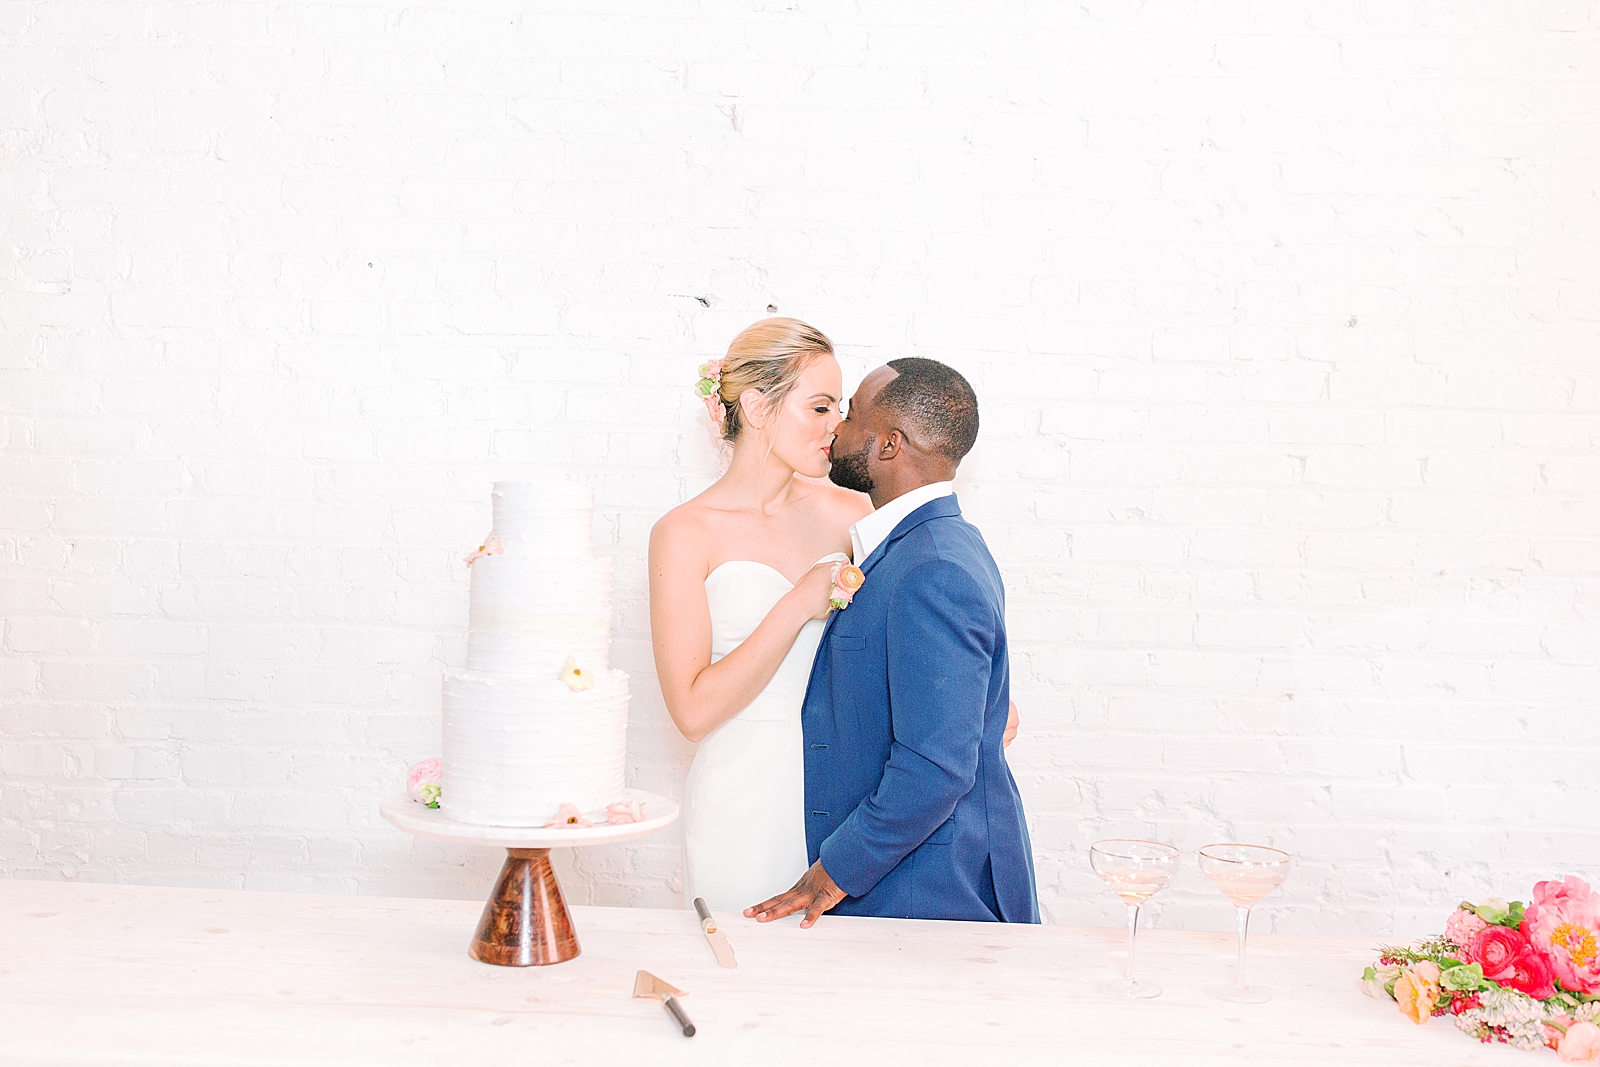 Spring Brickyard Wedding Reception Bride and Groom Kissing by cake Photo